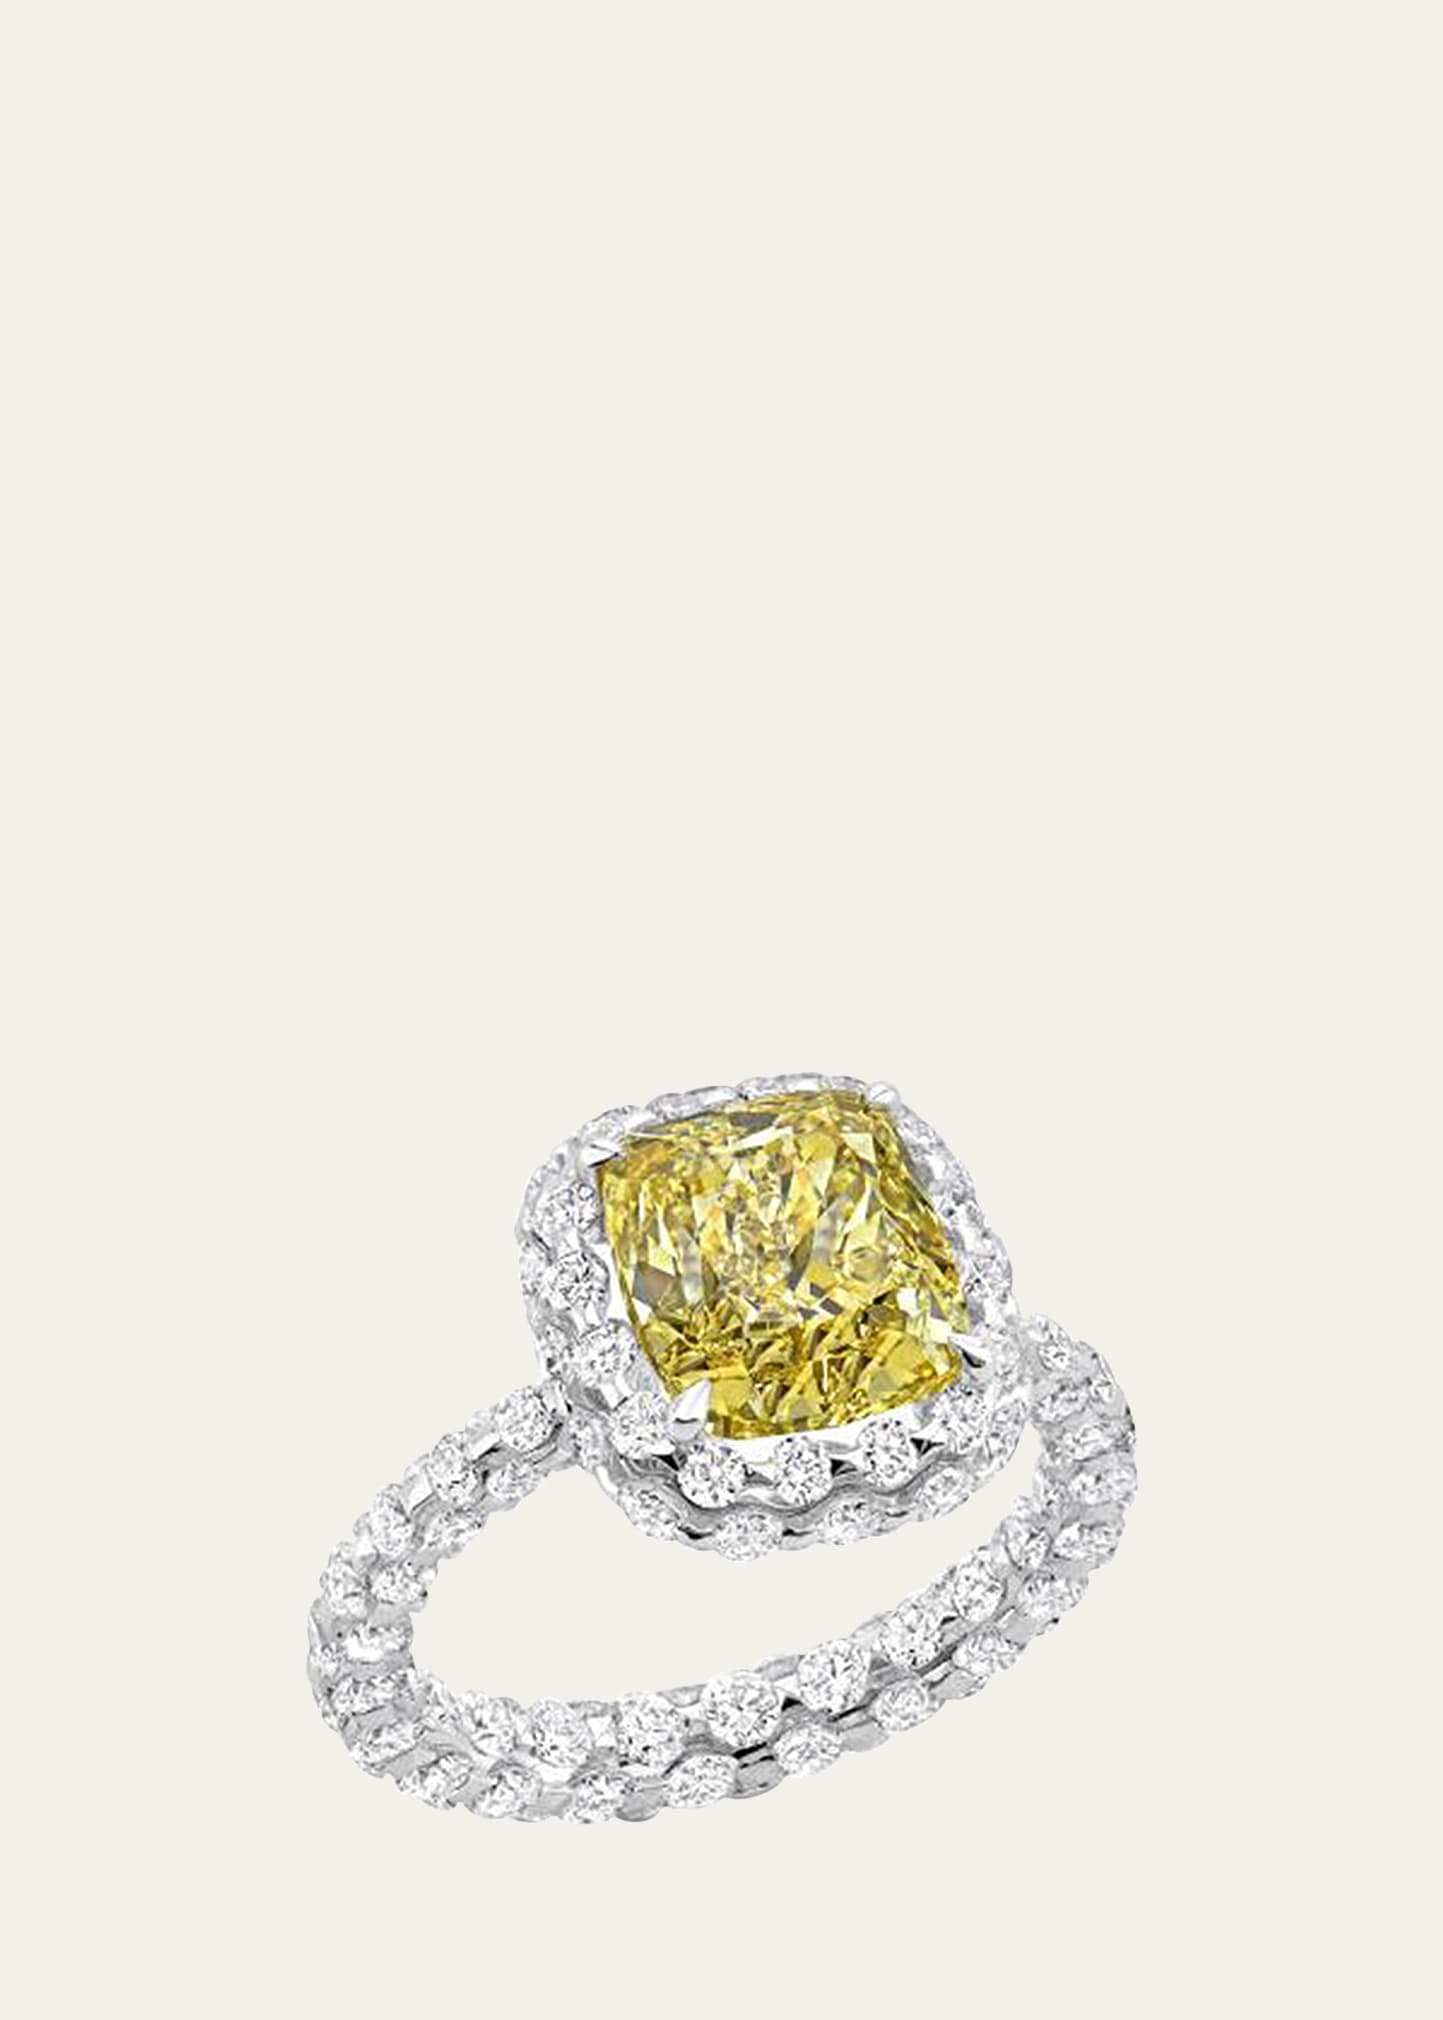 White Gold Ring with Yellow Diamonds and White Diamonds